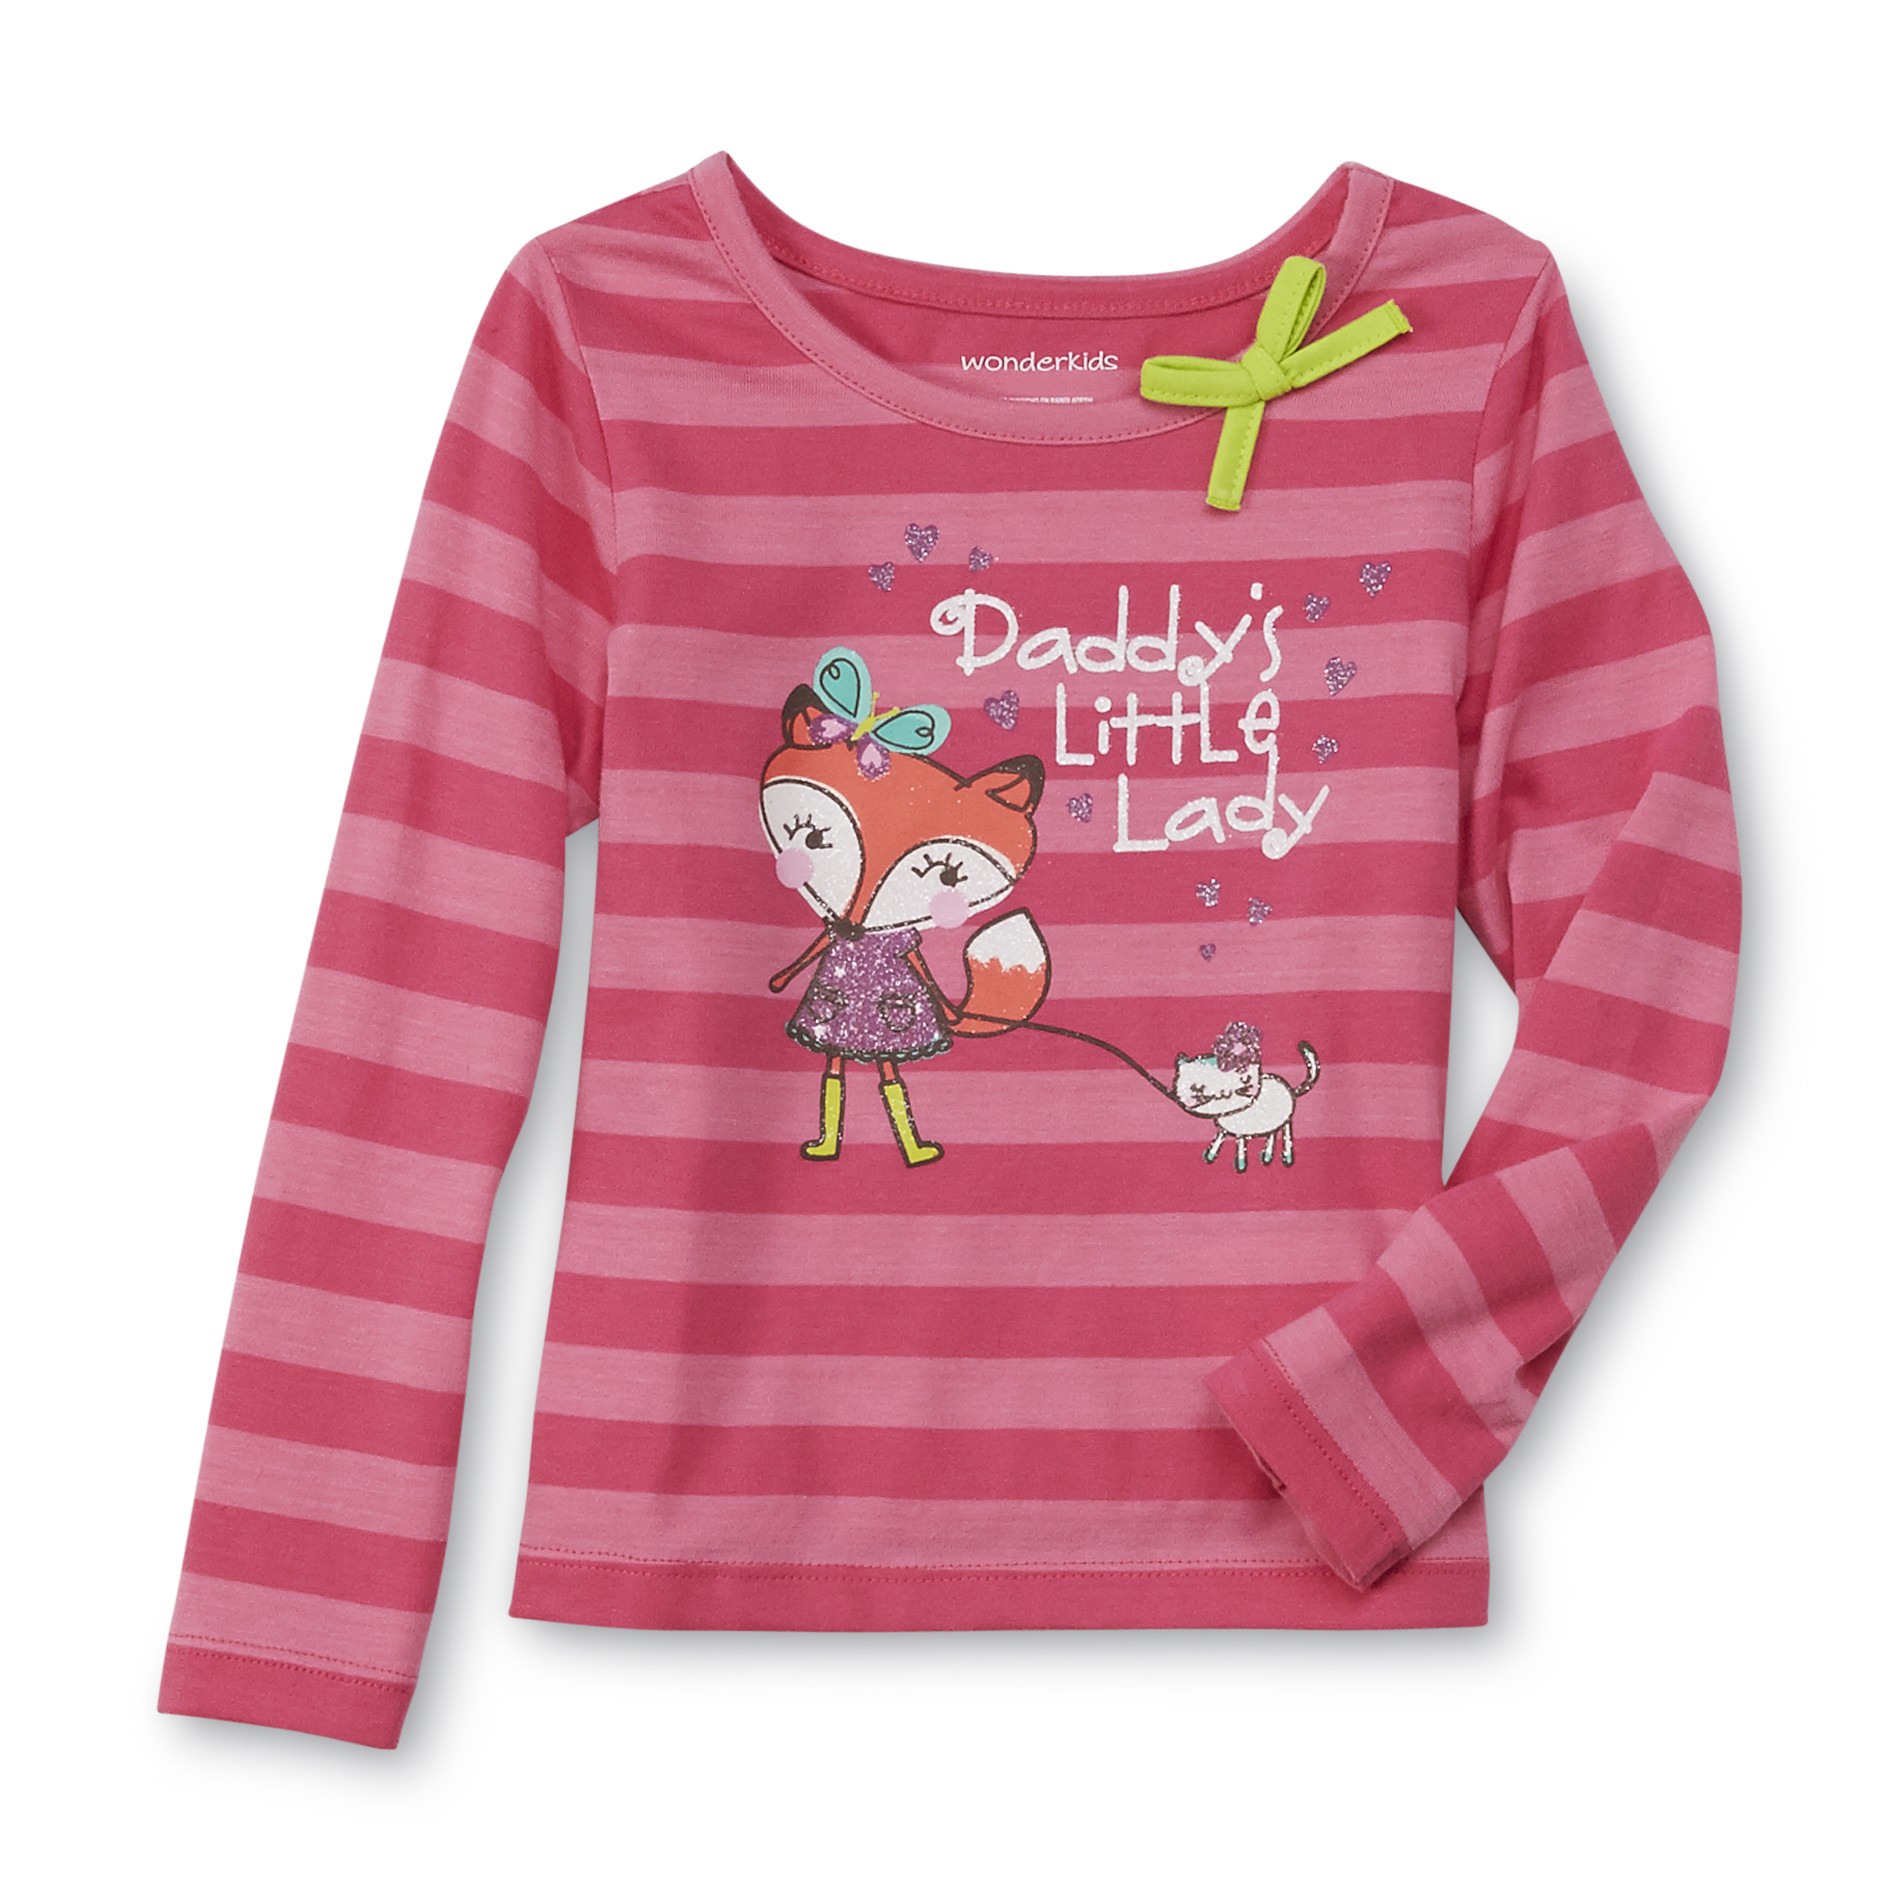 WonderKids Infant & Toddler Girl's Long-Sleeve T-Shirt - Daddy's Little Lady